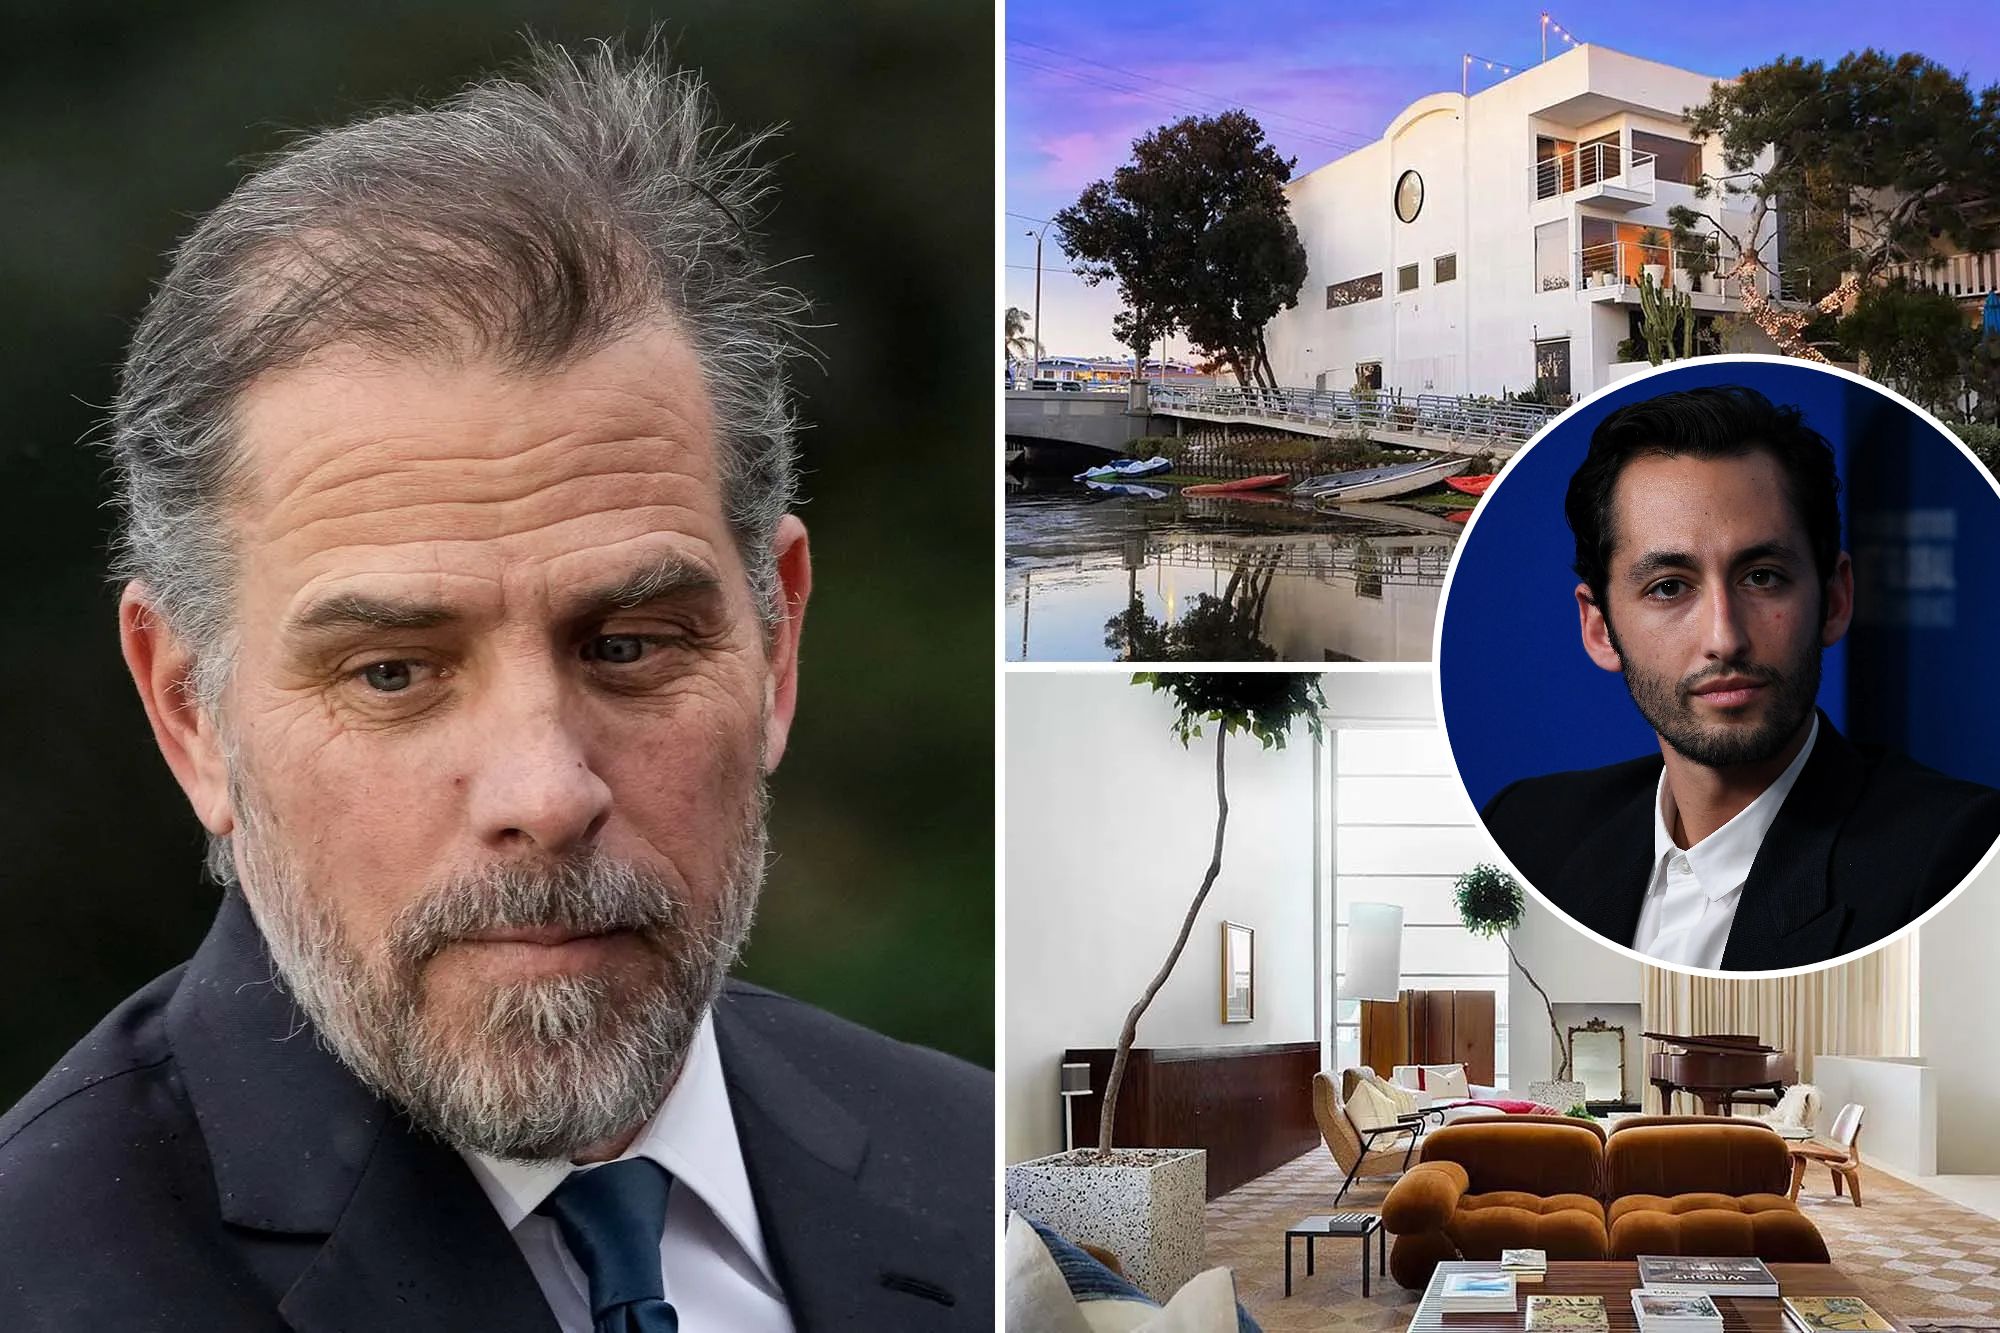 Hunter Biden trashed and damaged Sweetgreen co-founder’s house, skimped on $80K in rent